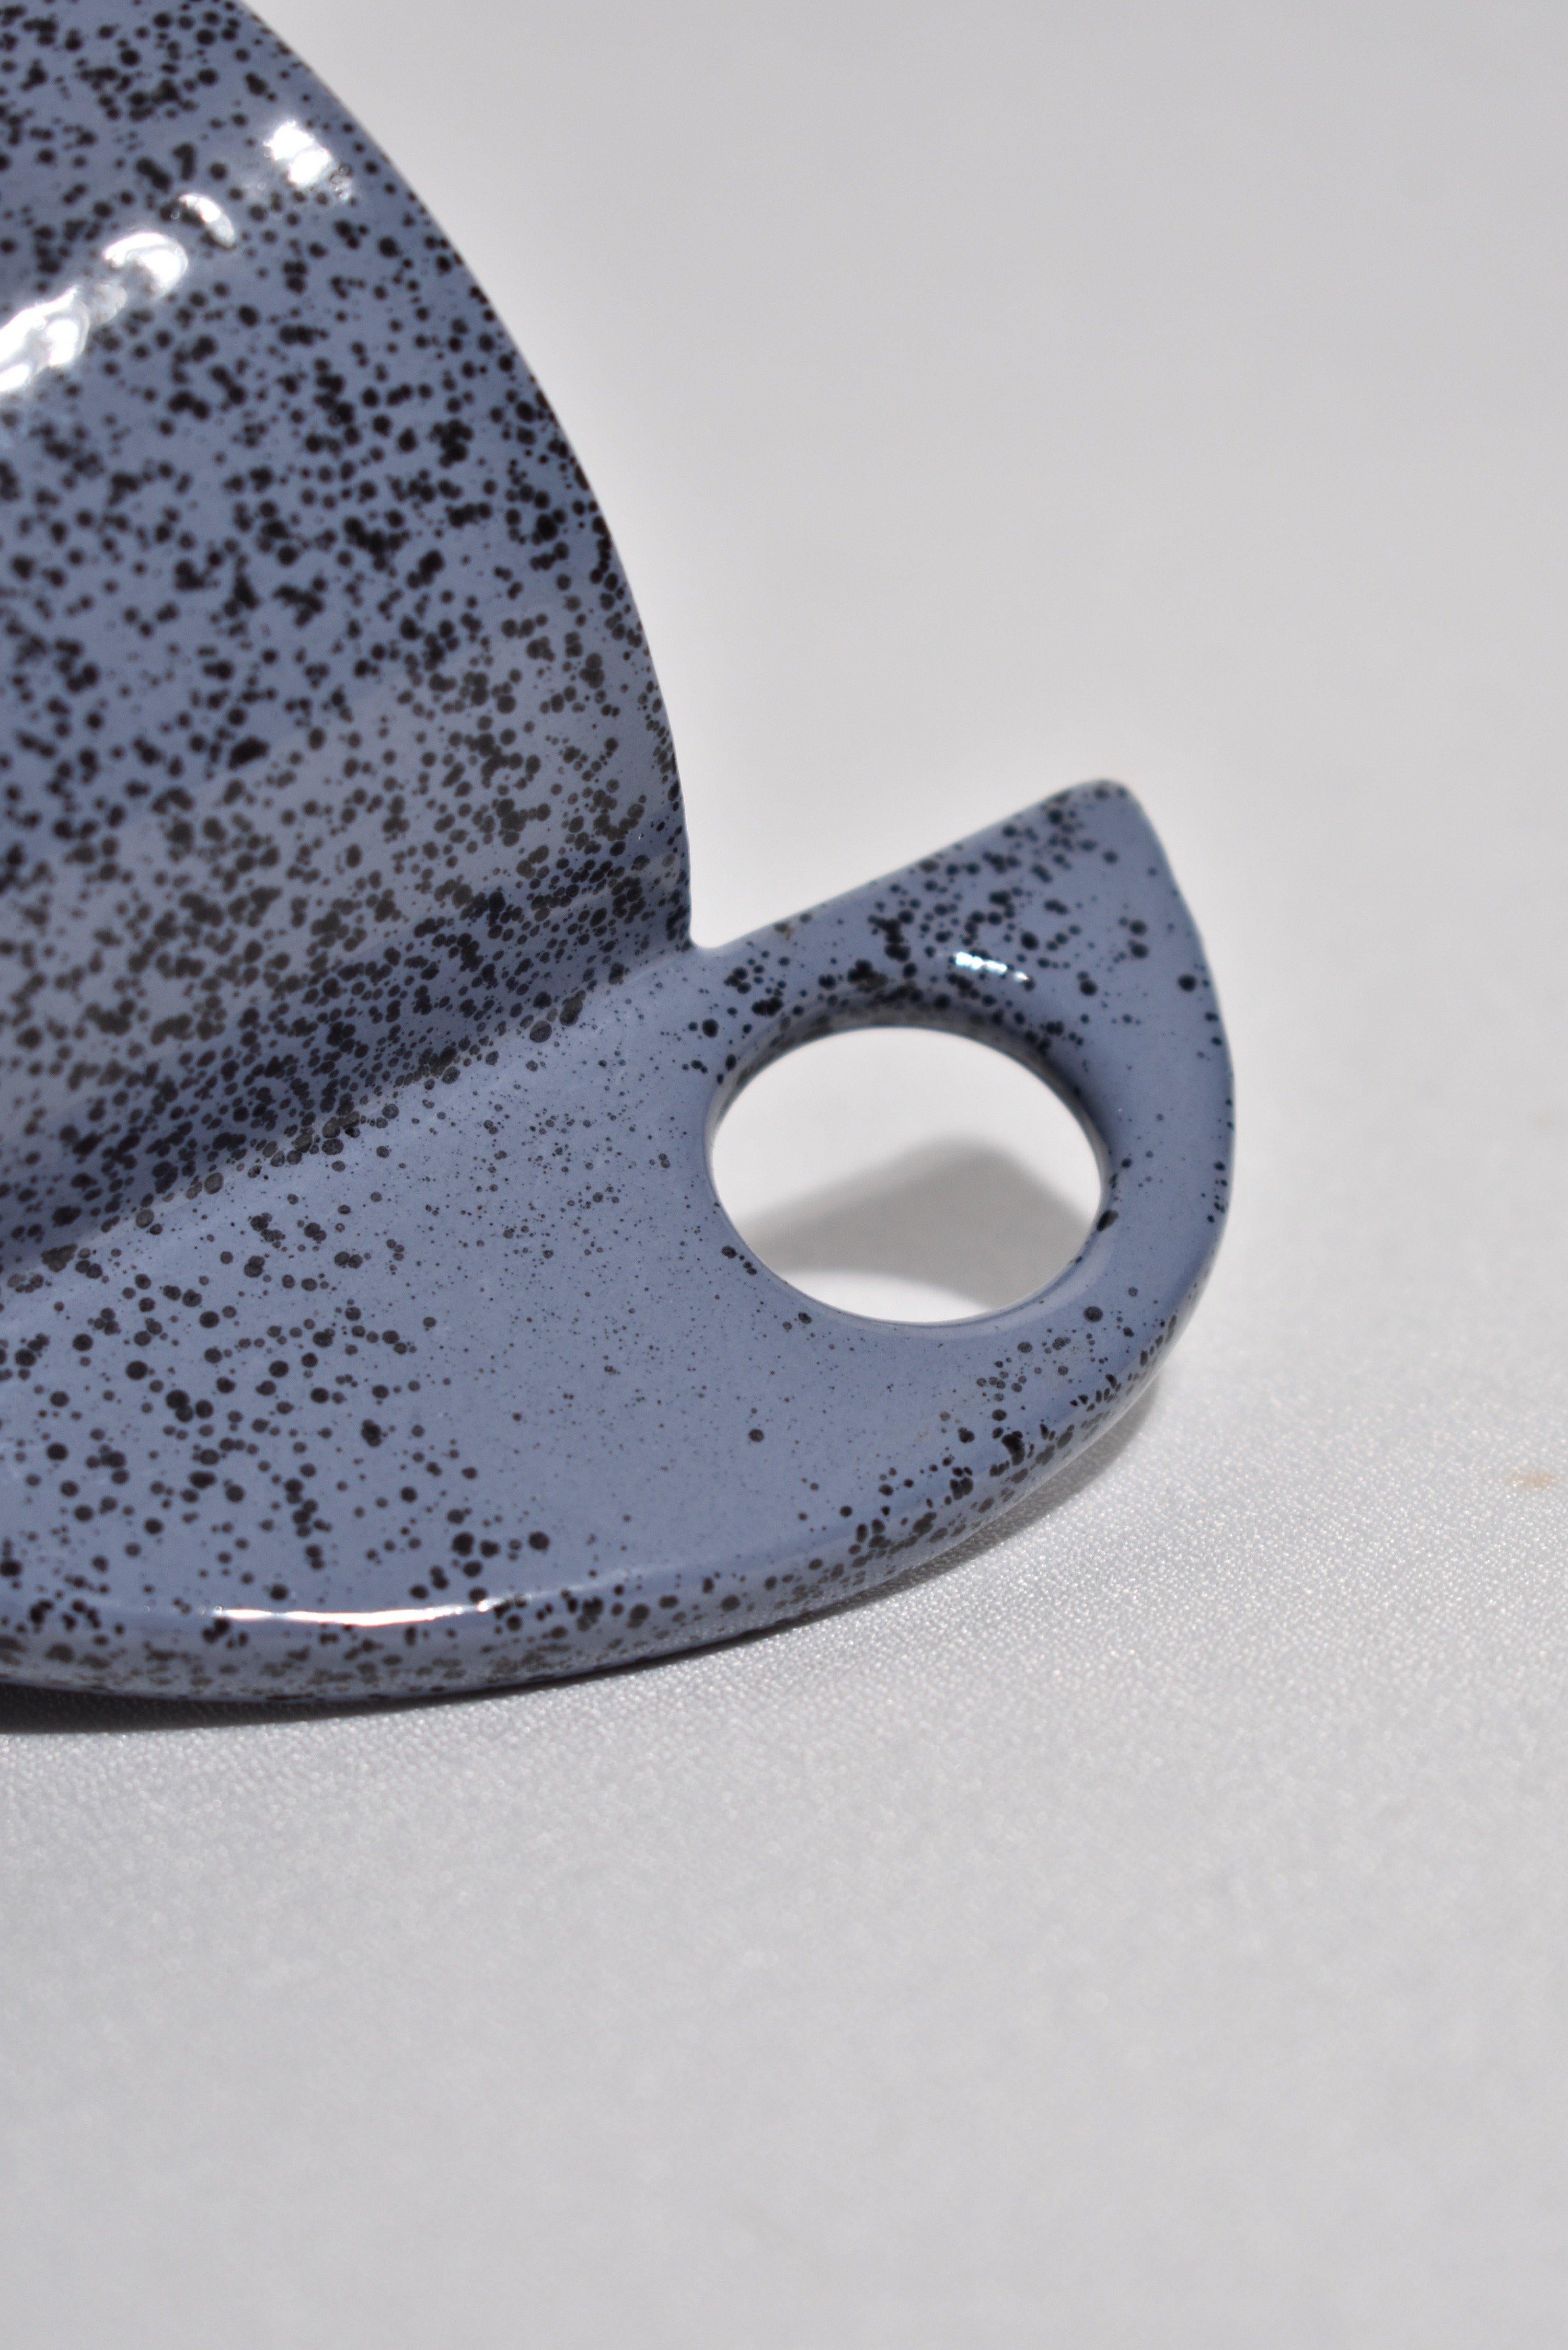 Hand-Crafted Postmodern Ceramic Teacup Set in Blue Speckle Pattern